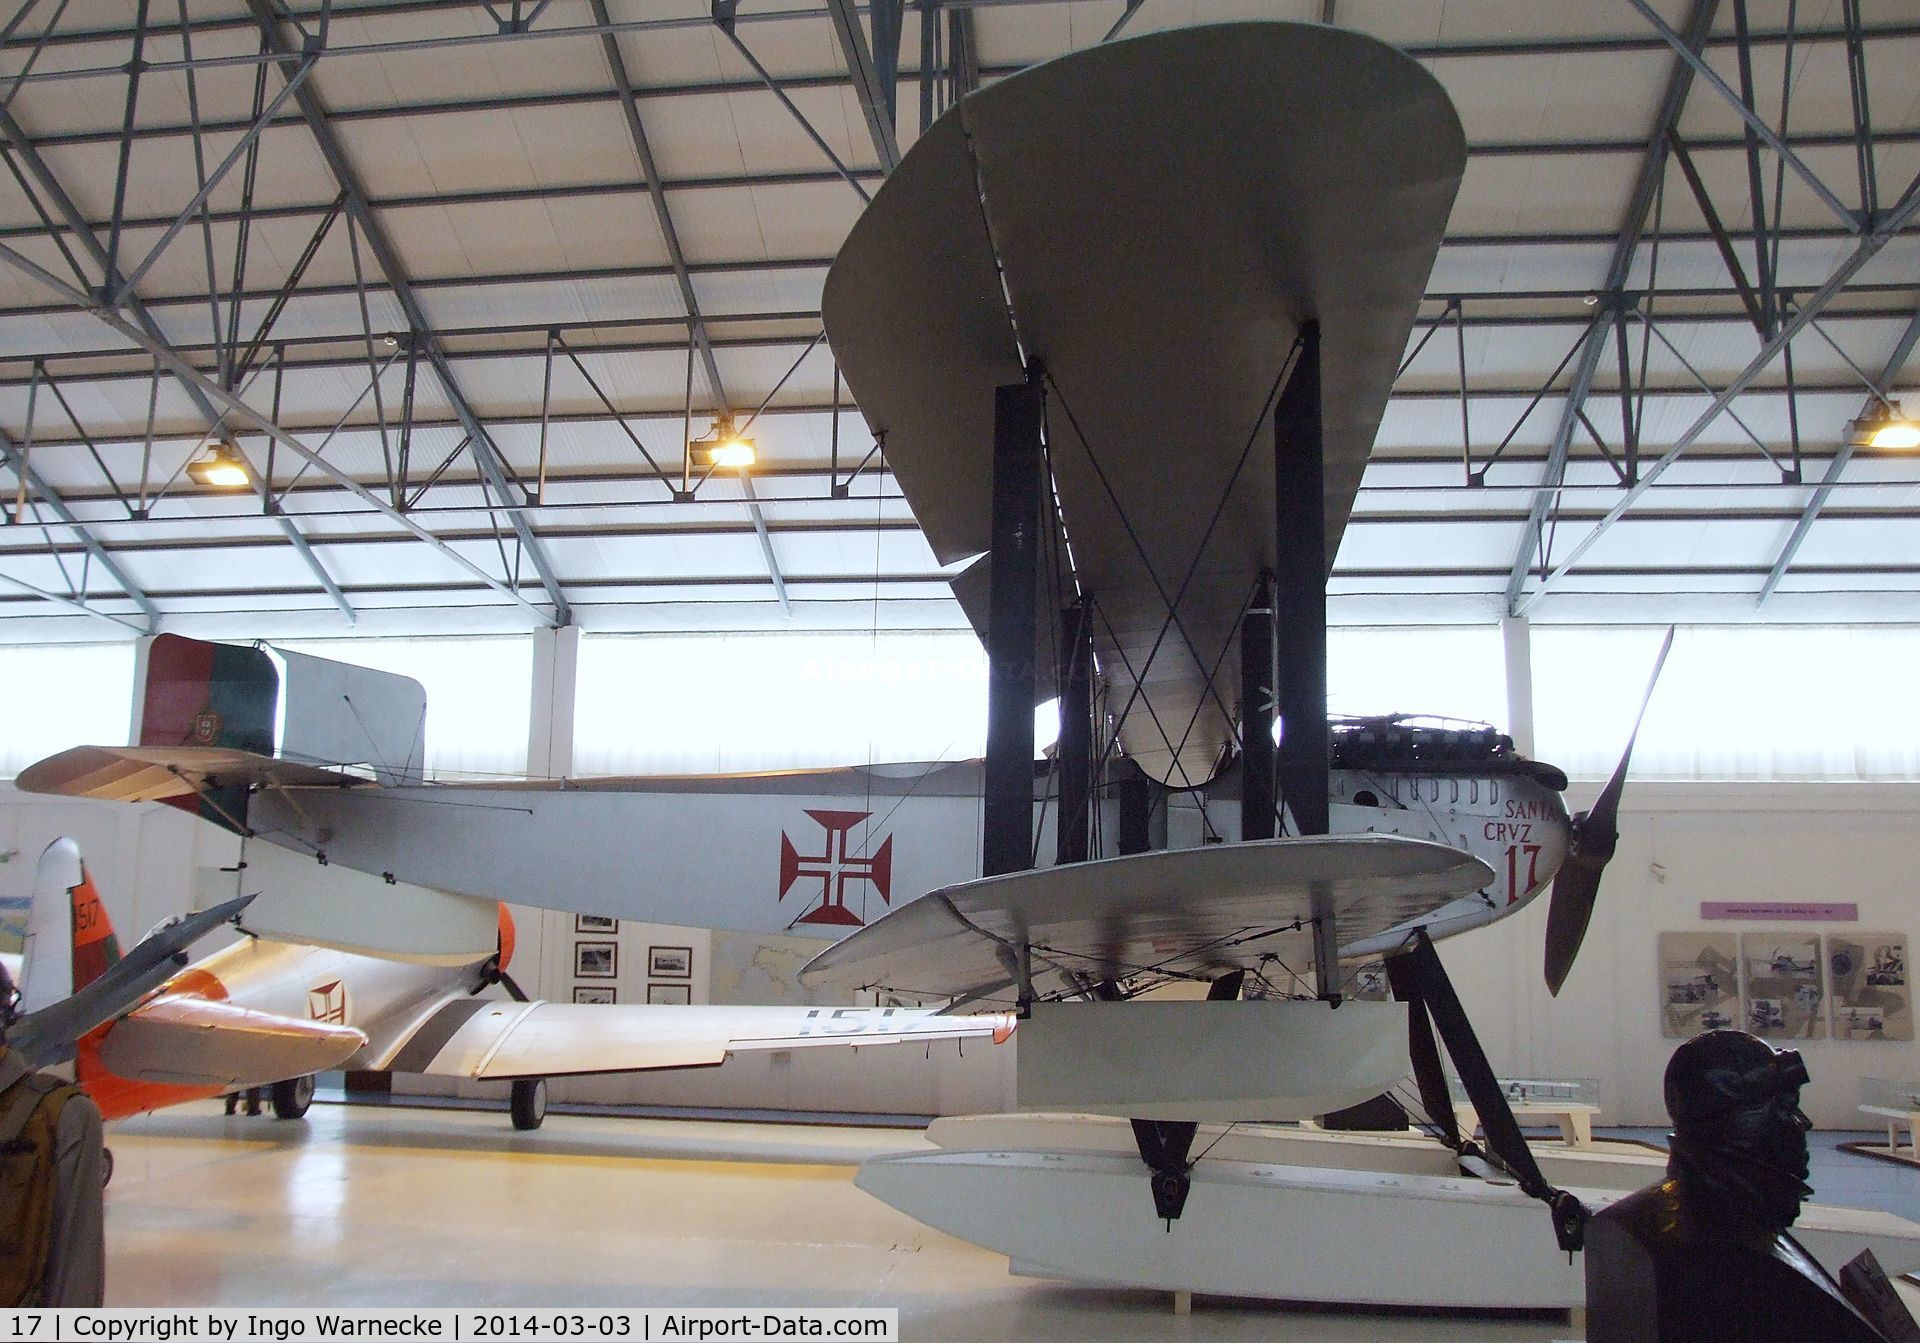 17, Fairey IIID Seaplane Replica C/N Not found 17, Fairey IIID Replica at the Museu do Ar, Alverca